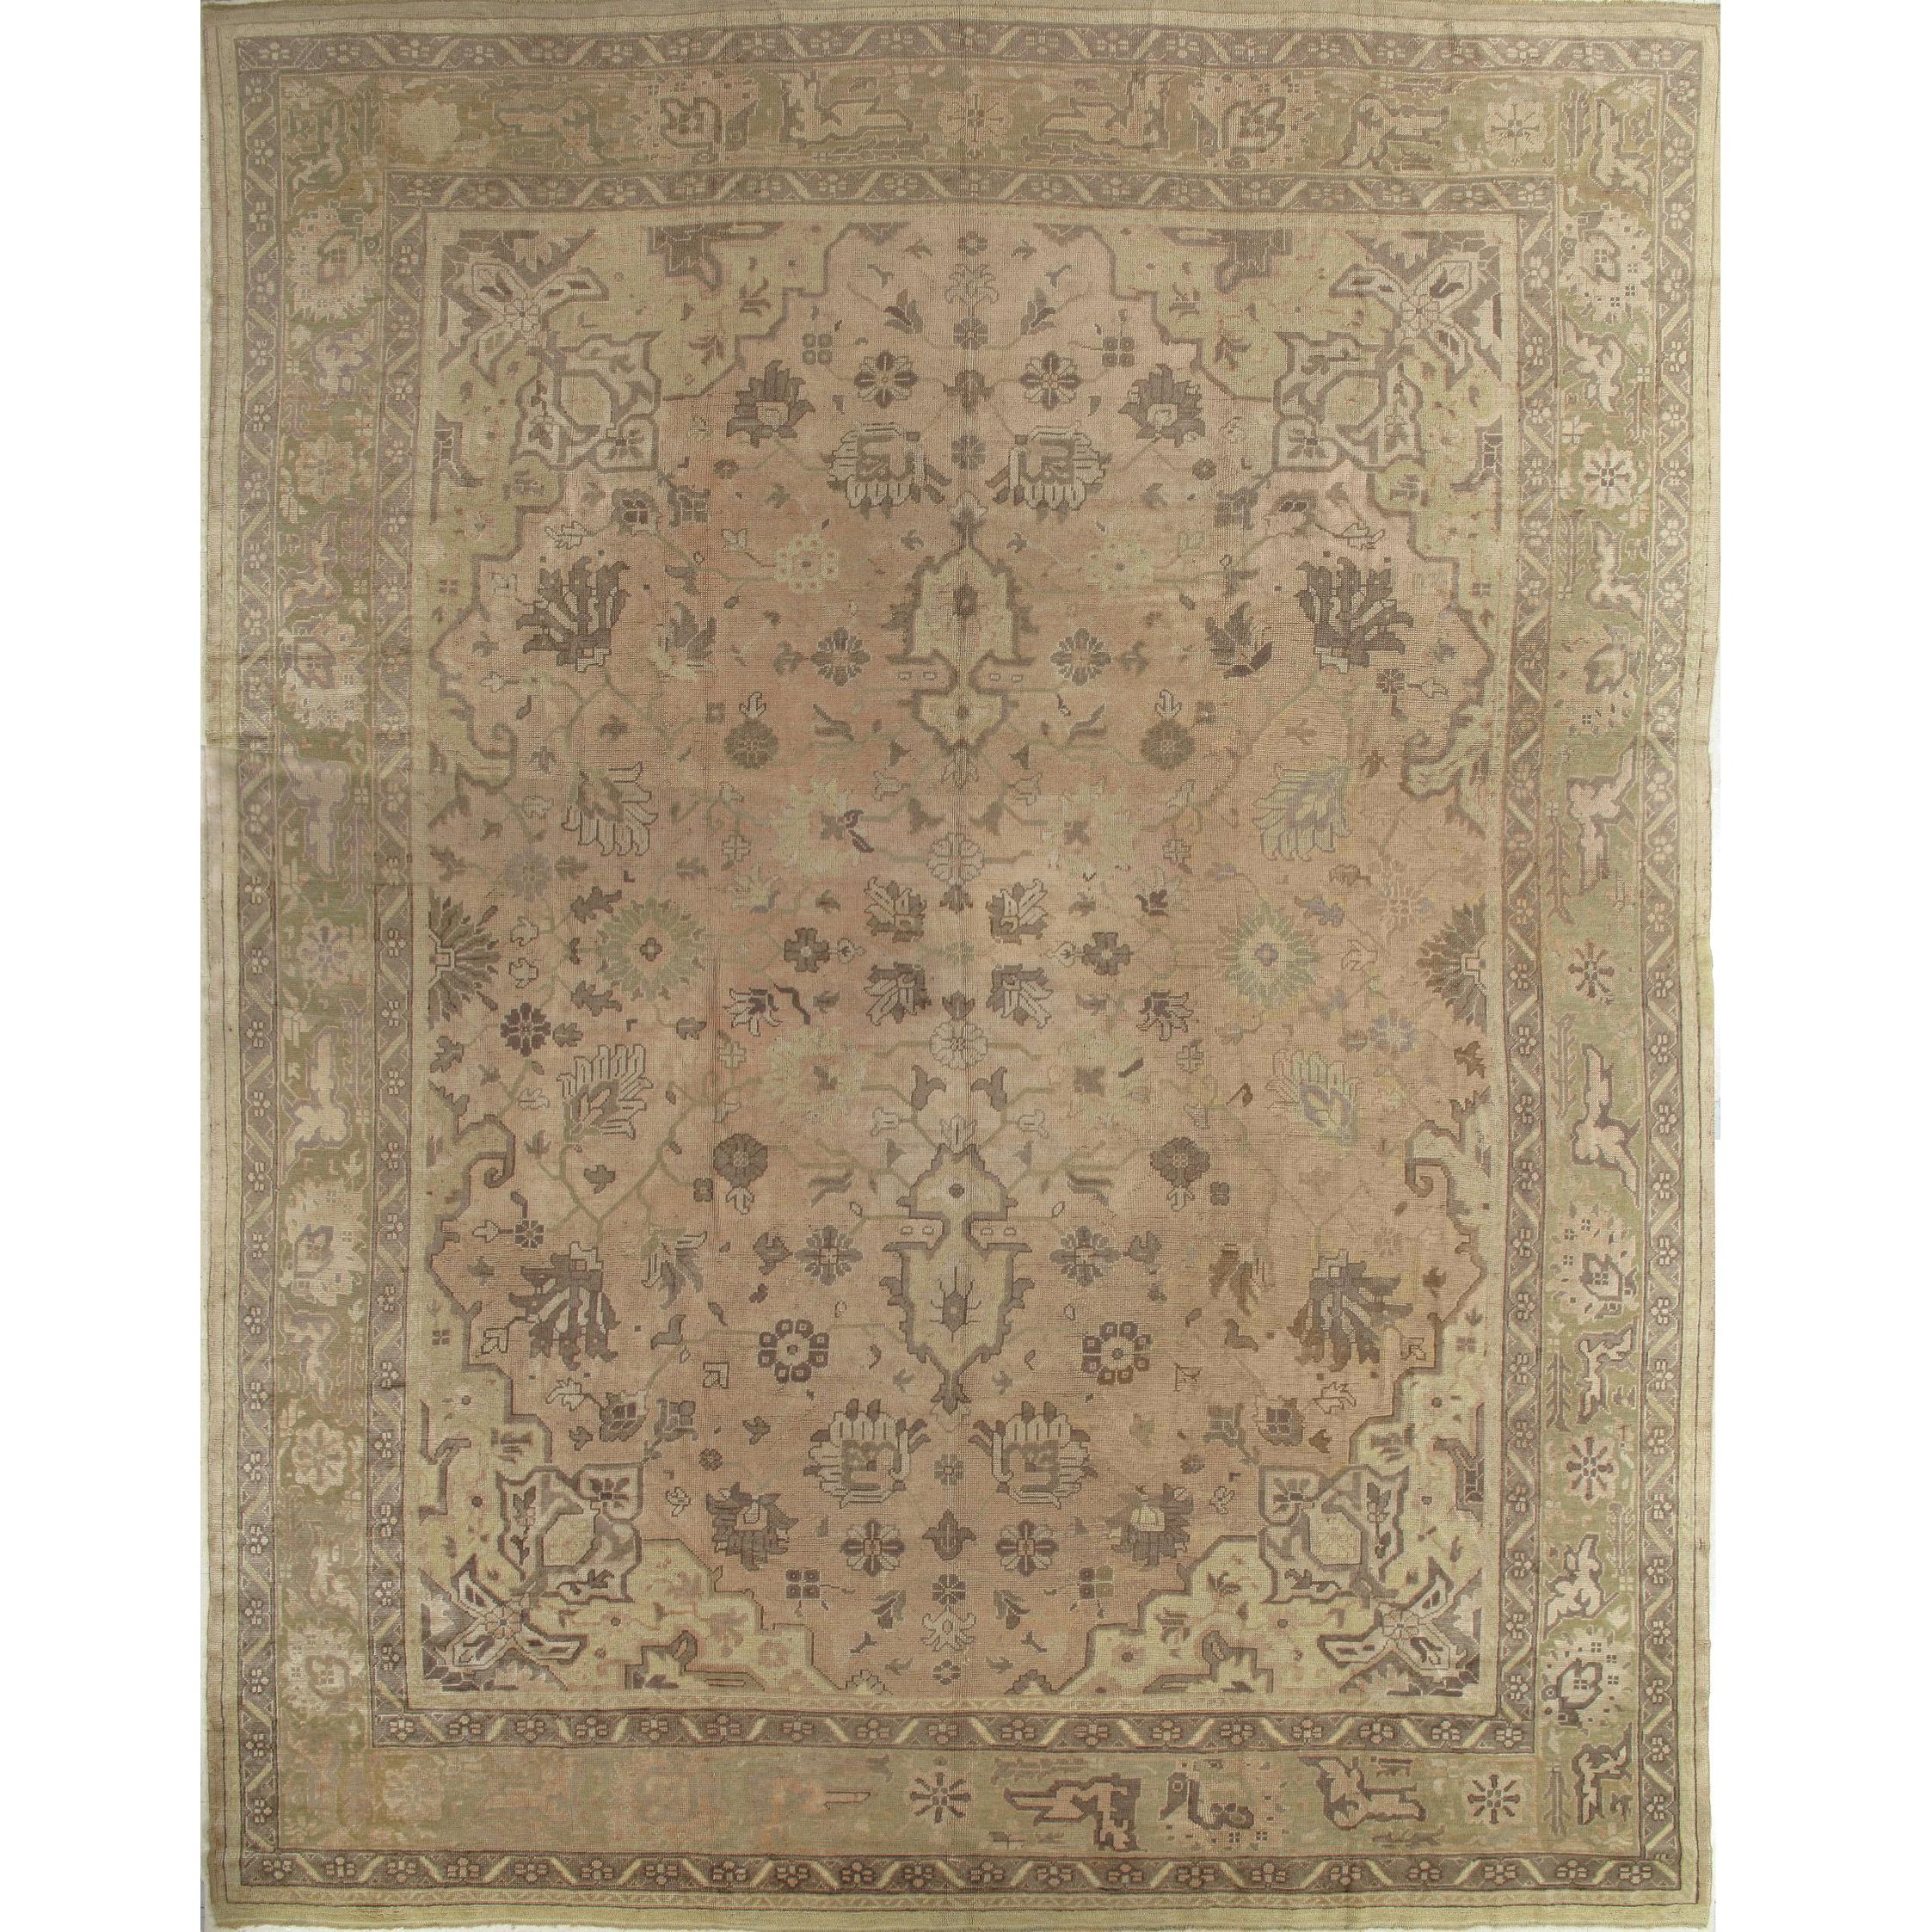 Antique Oushak Carpet, Handmade Oriental Rug, Soft, Taupe, Brown, Beige